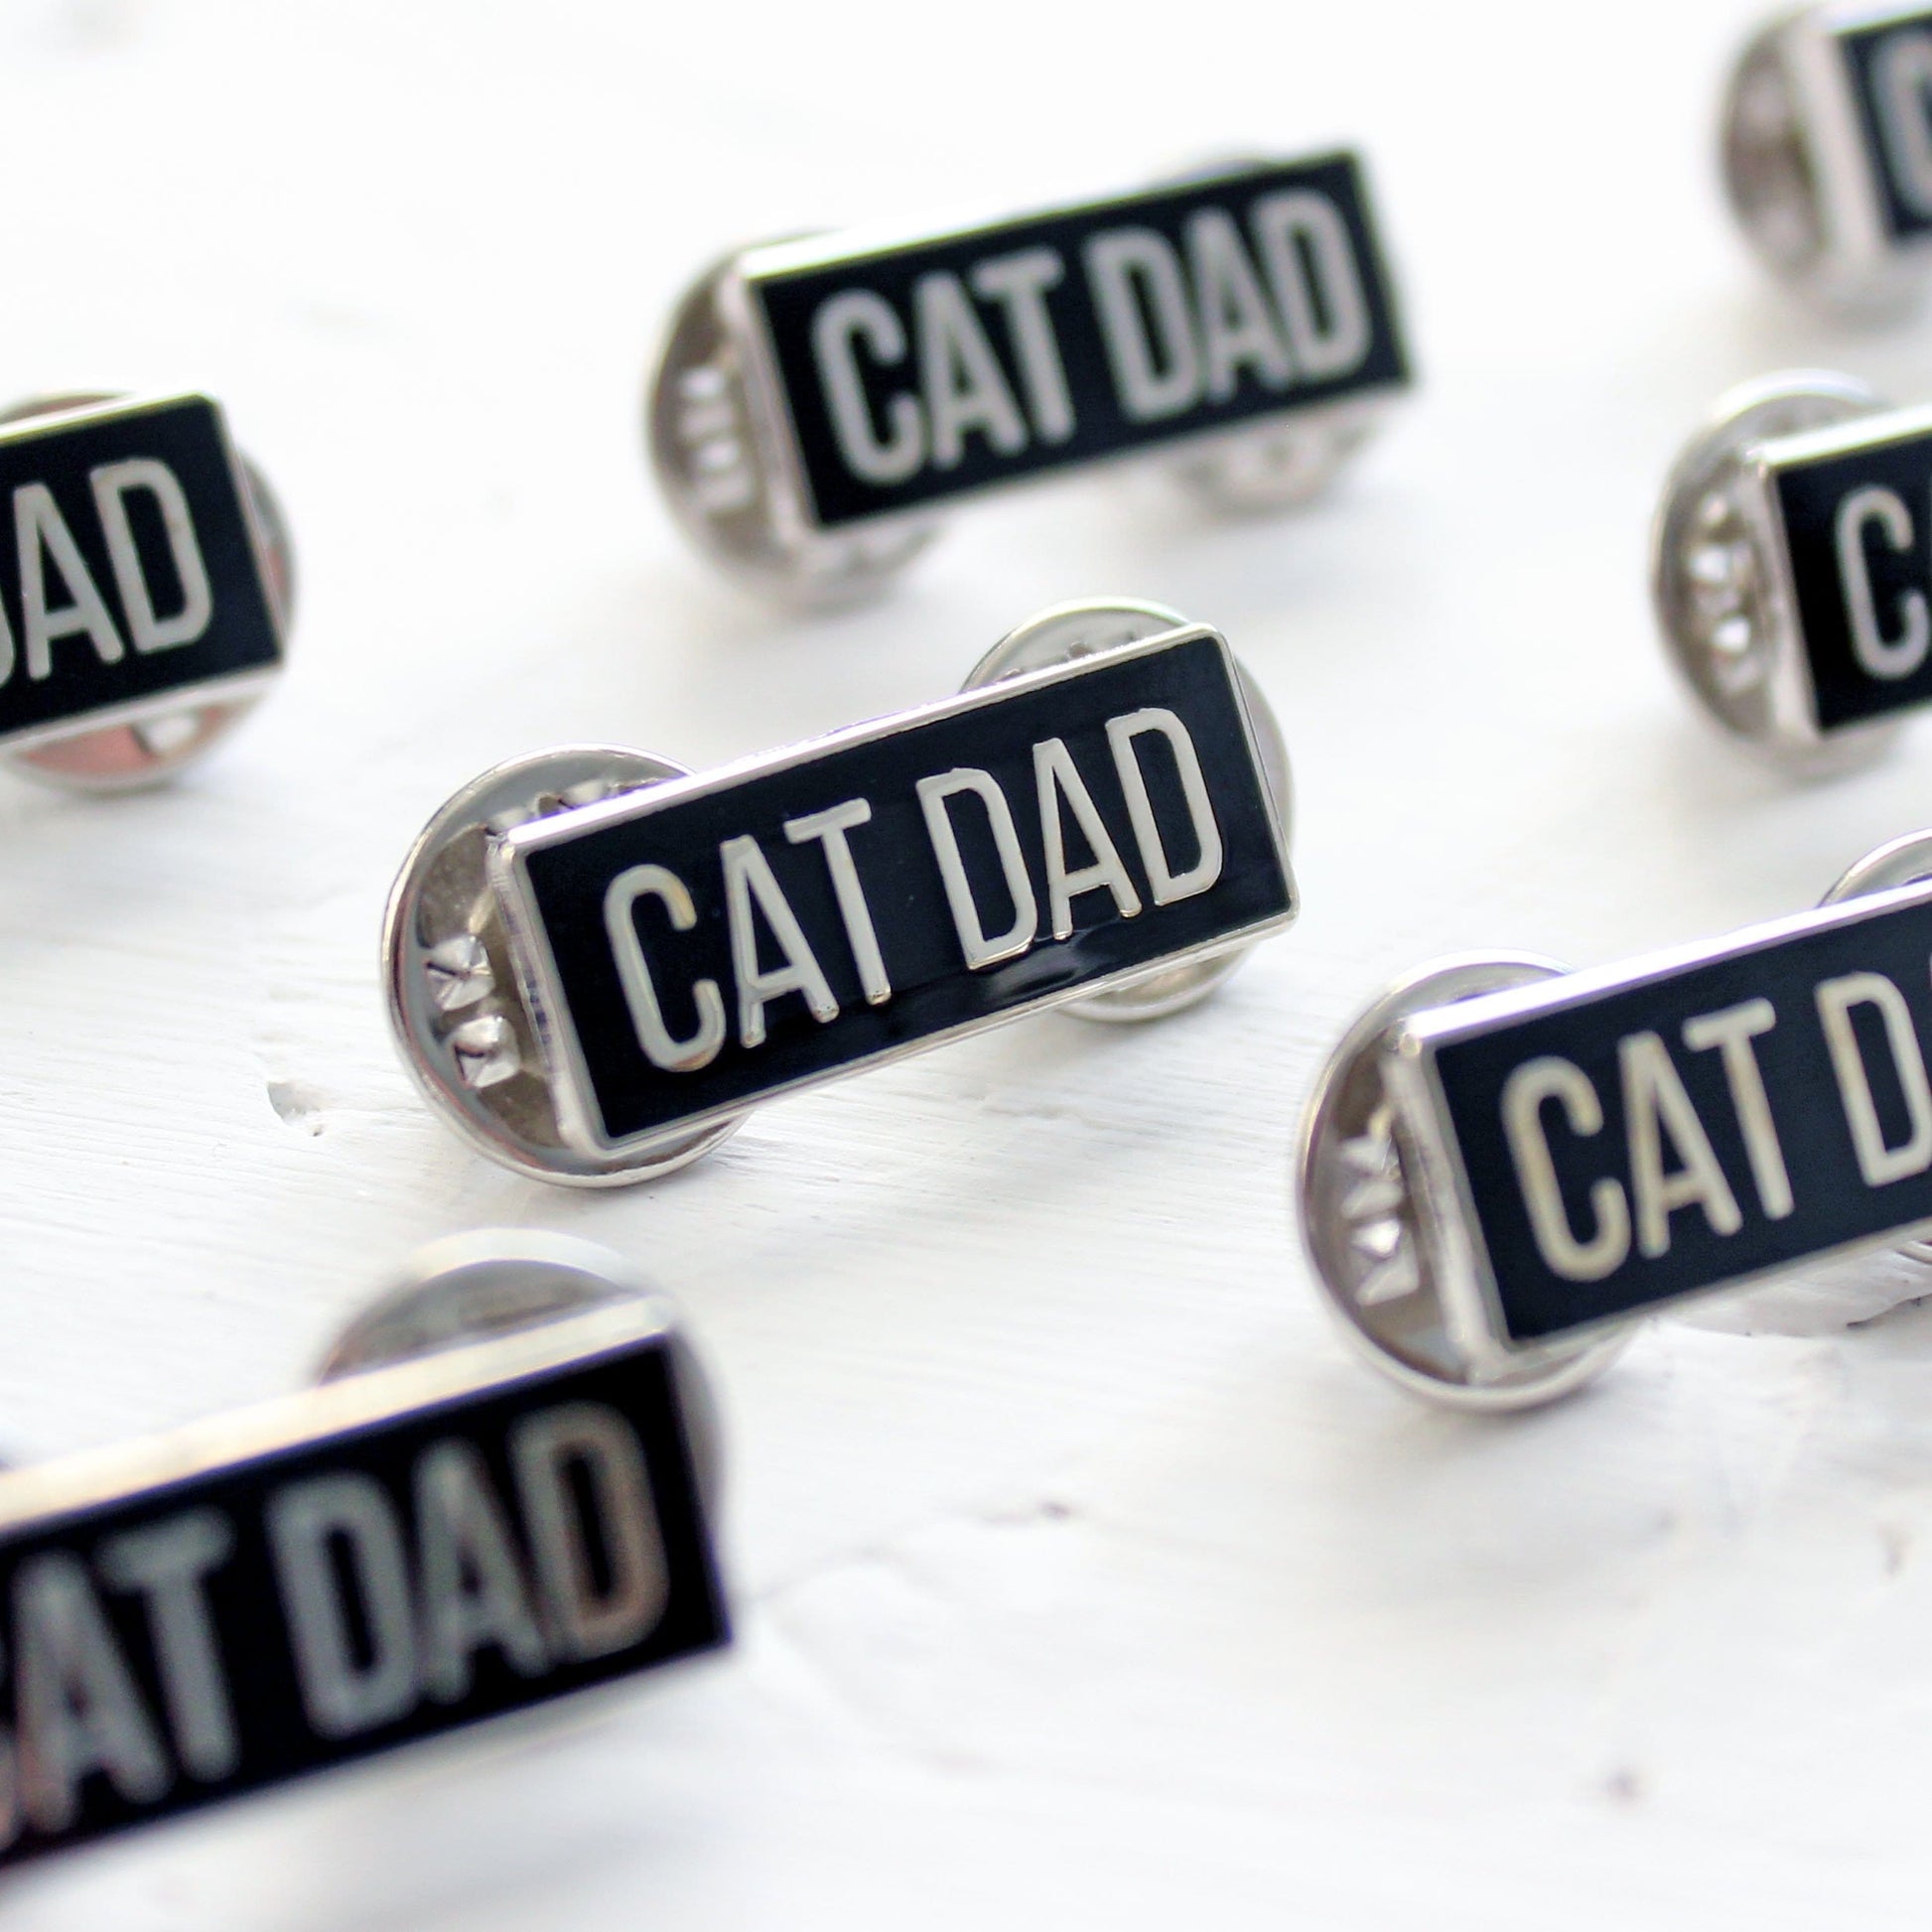 Cat dad enamel pin badge from Purple Tree Designs